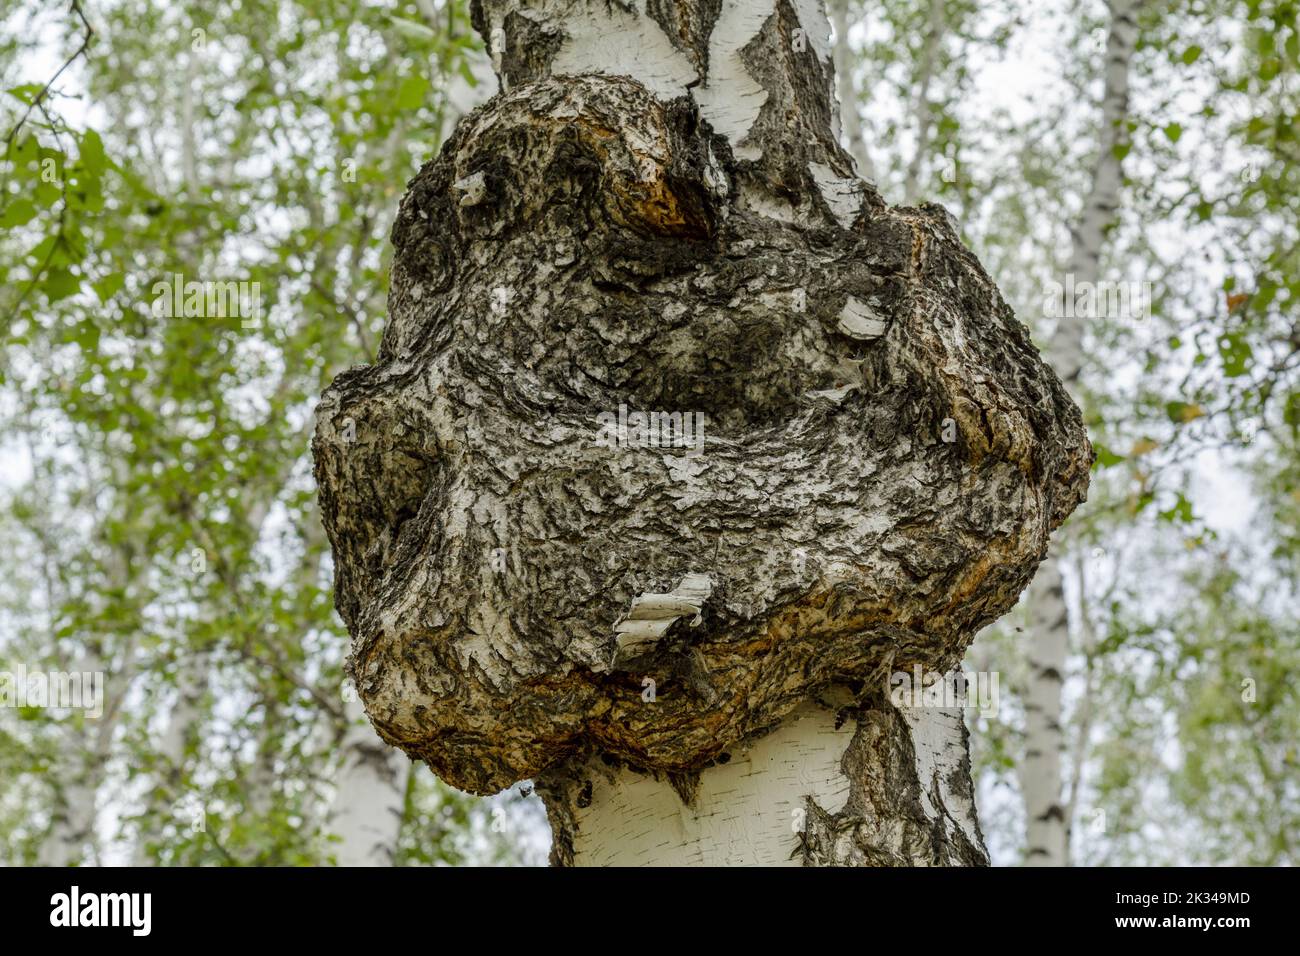 Medicinal chaga mushroom growing on a birch. Stock Photo